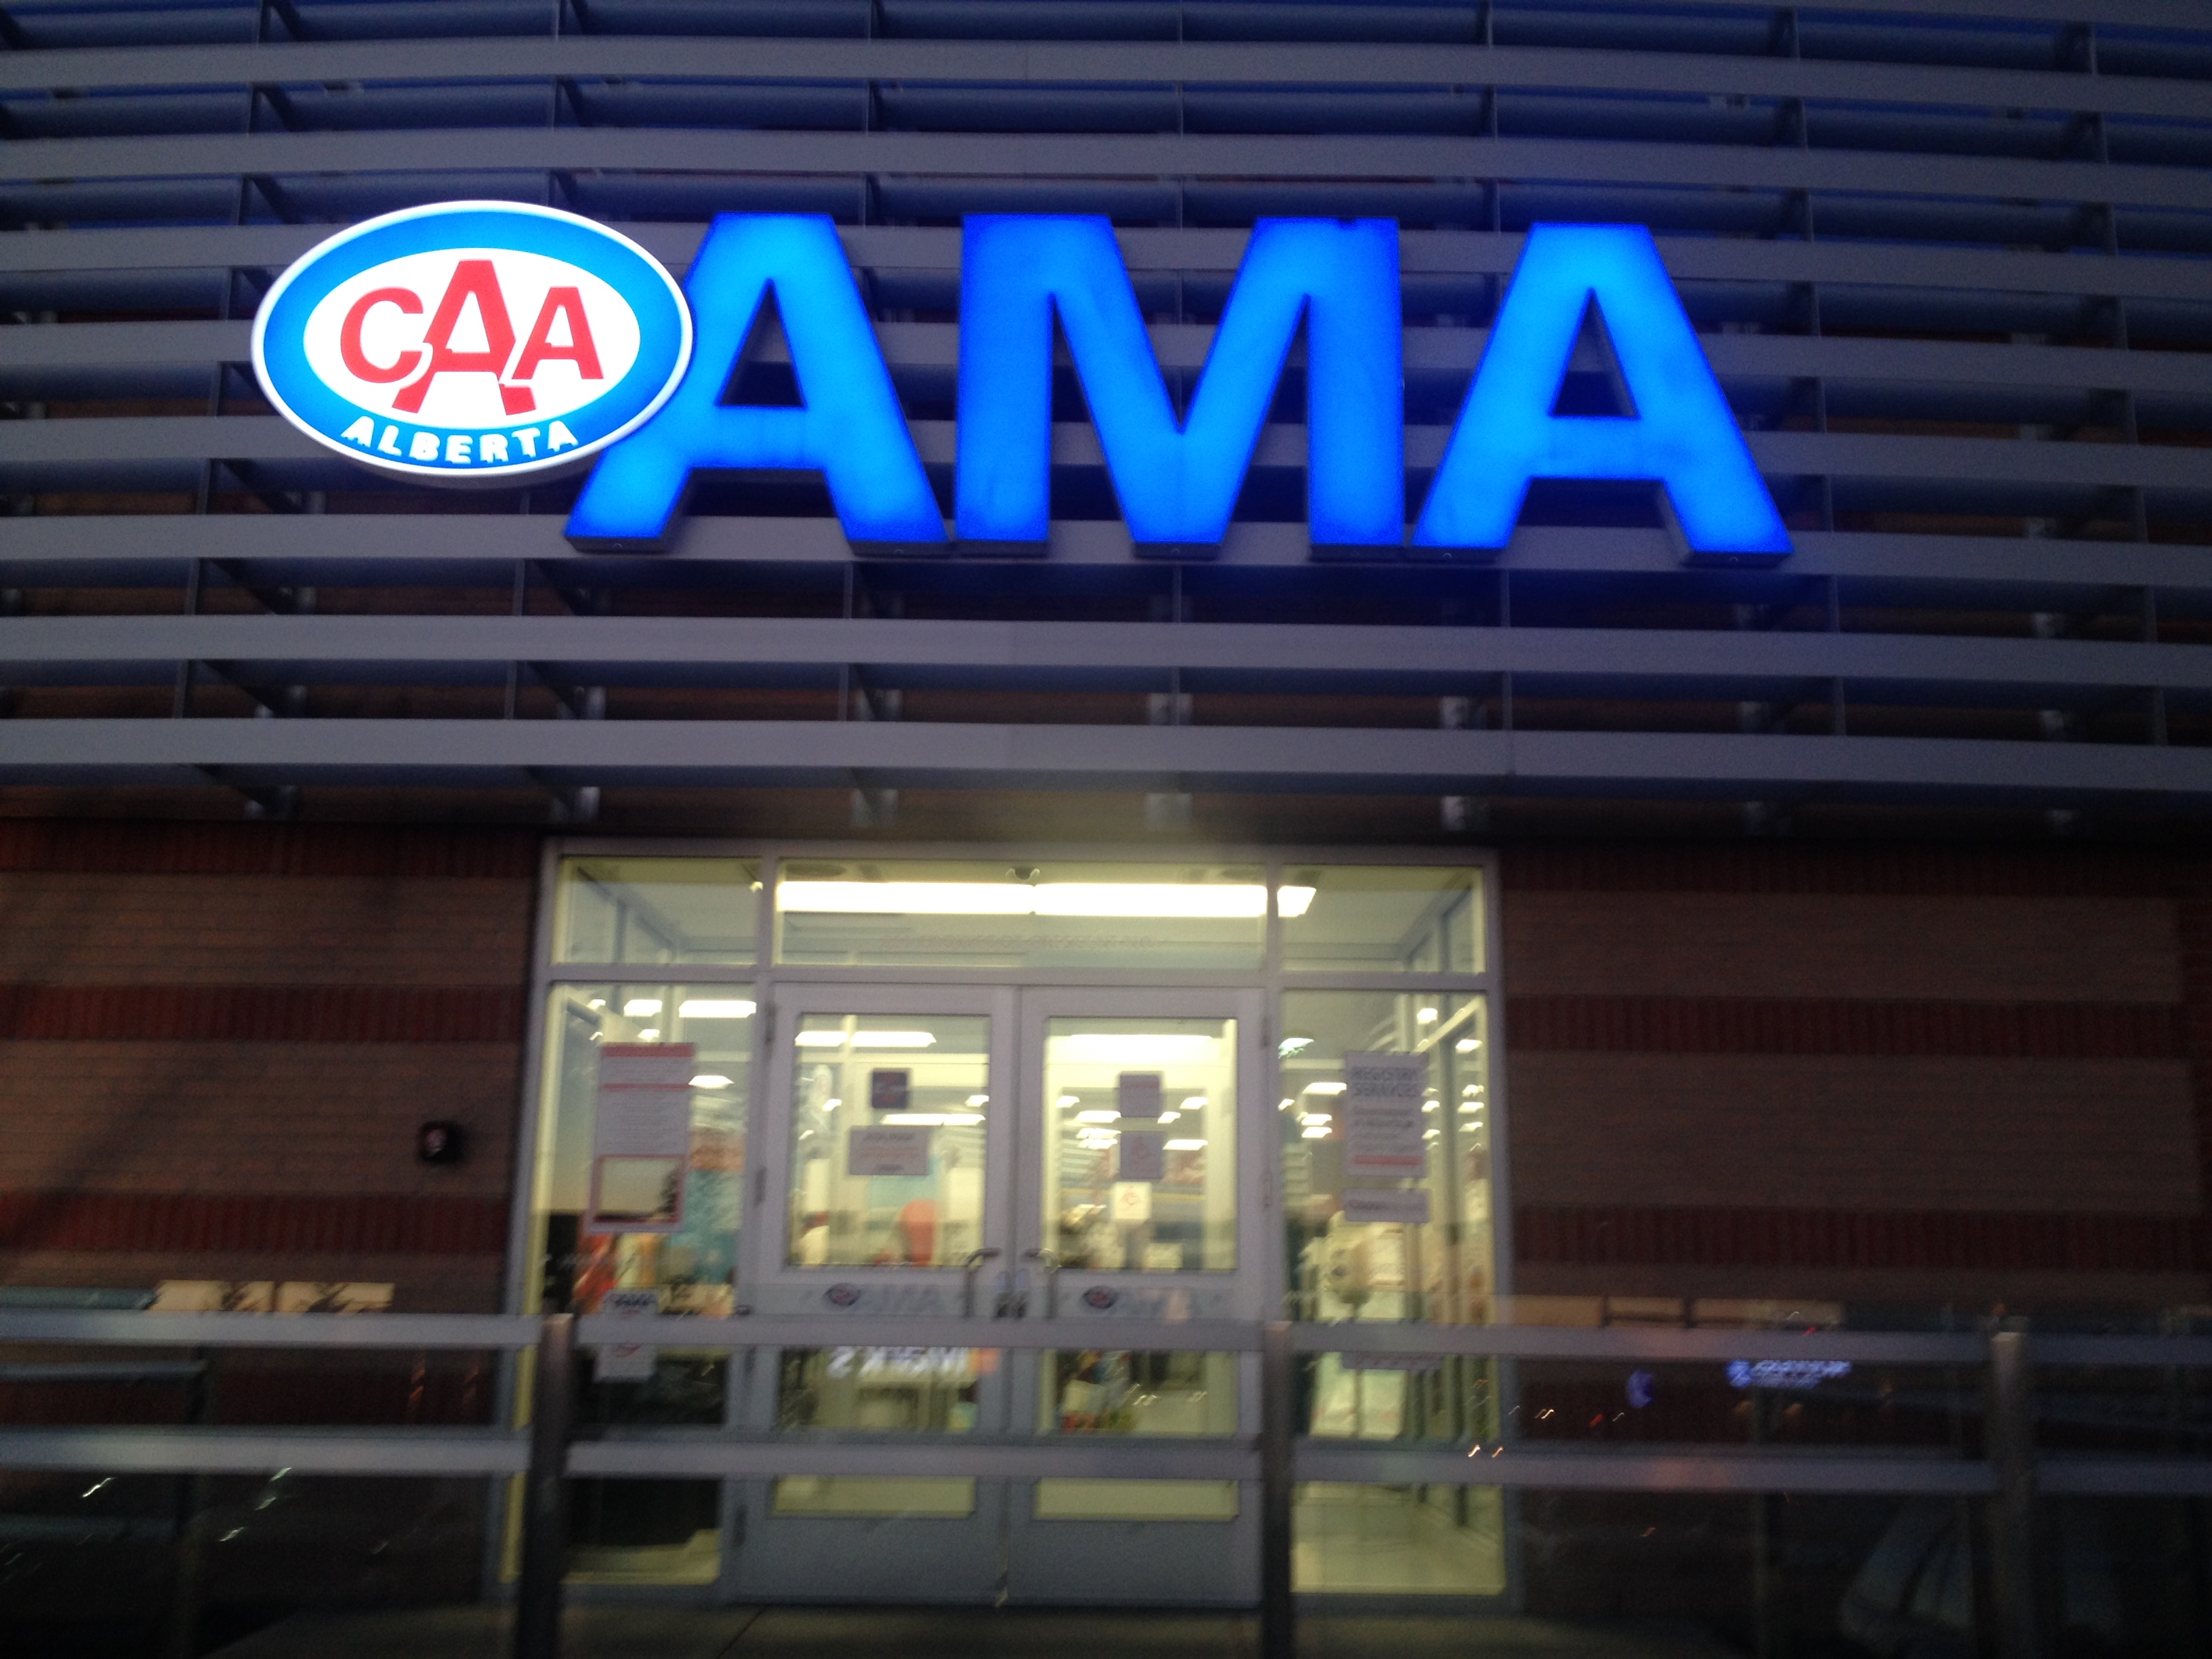 CAA - AMA Commercial 2013